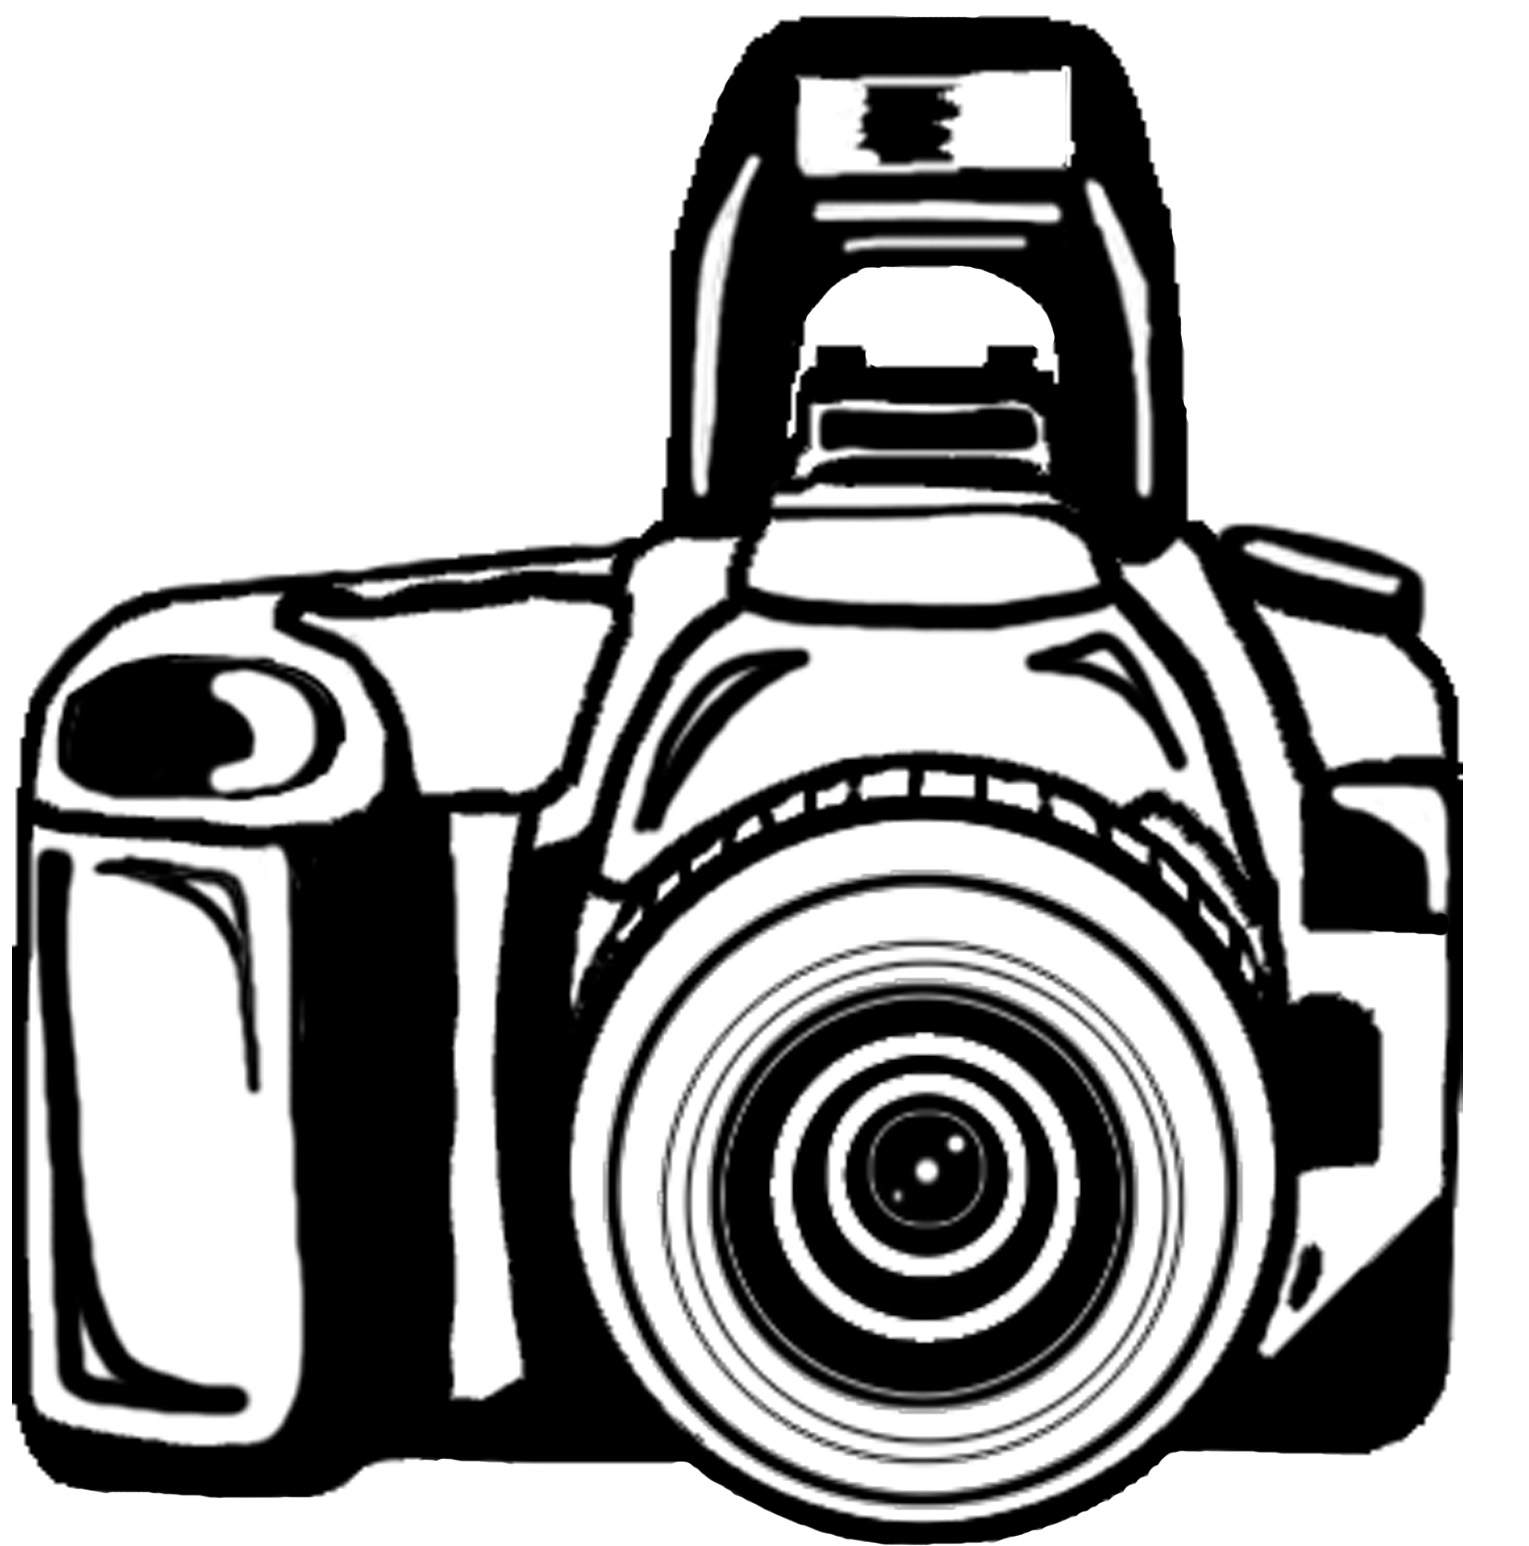 Free Camera Line Art, Download Free Camera Line Art png images, Free